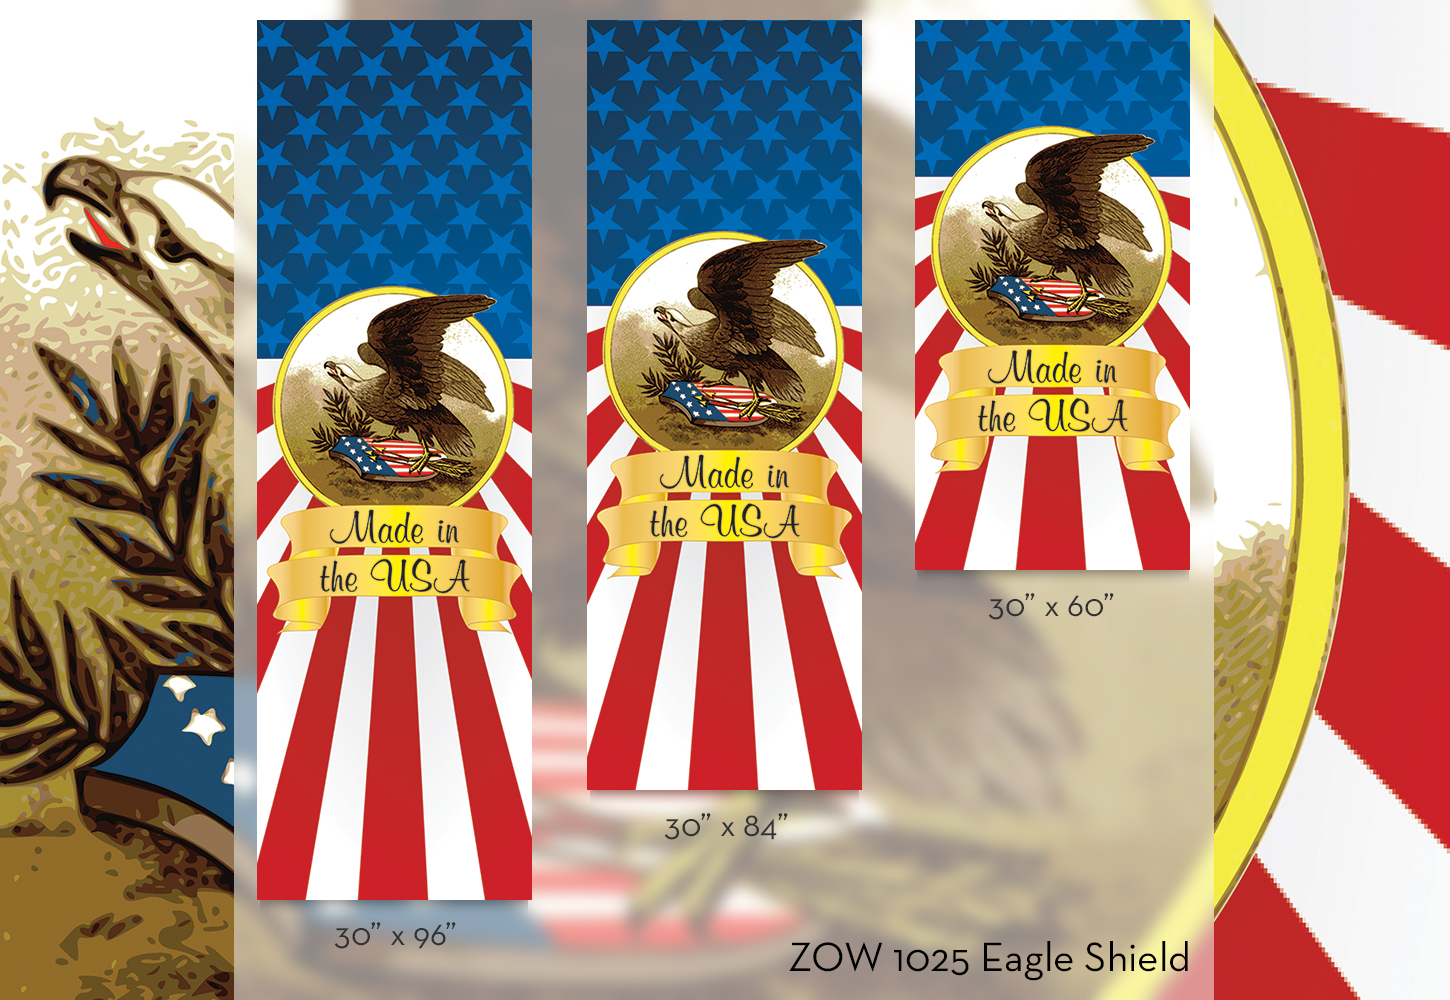 ZOW 1025 Eagle Shield